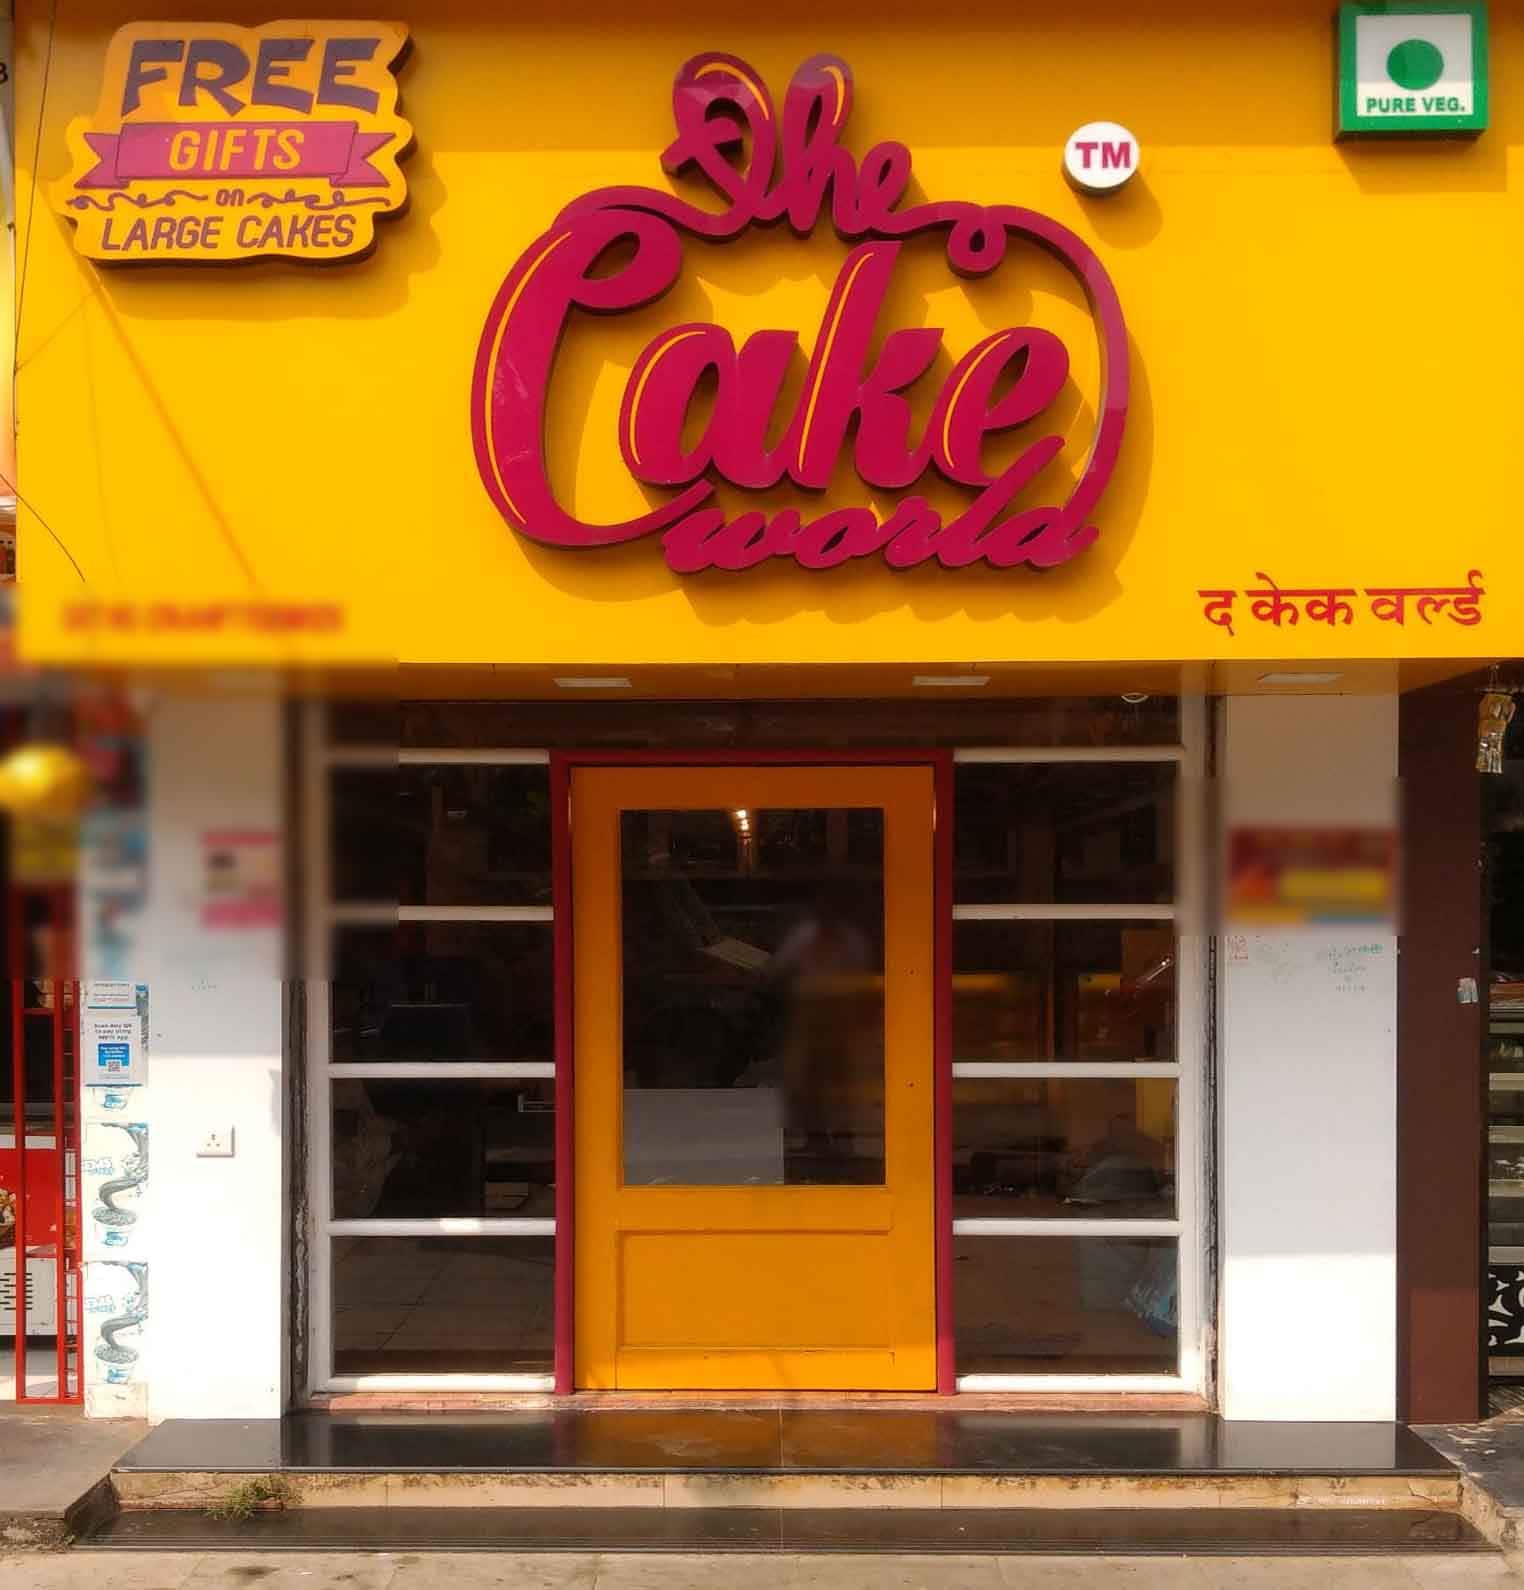 The Cake World, Kamothe, Navi Mumbai | Zomato